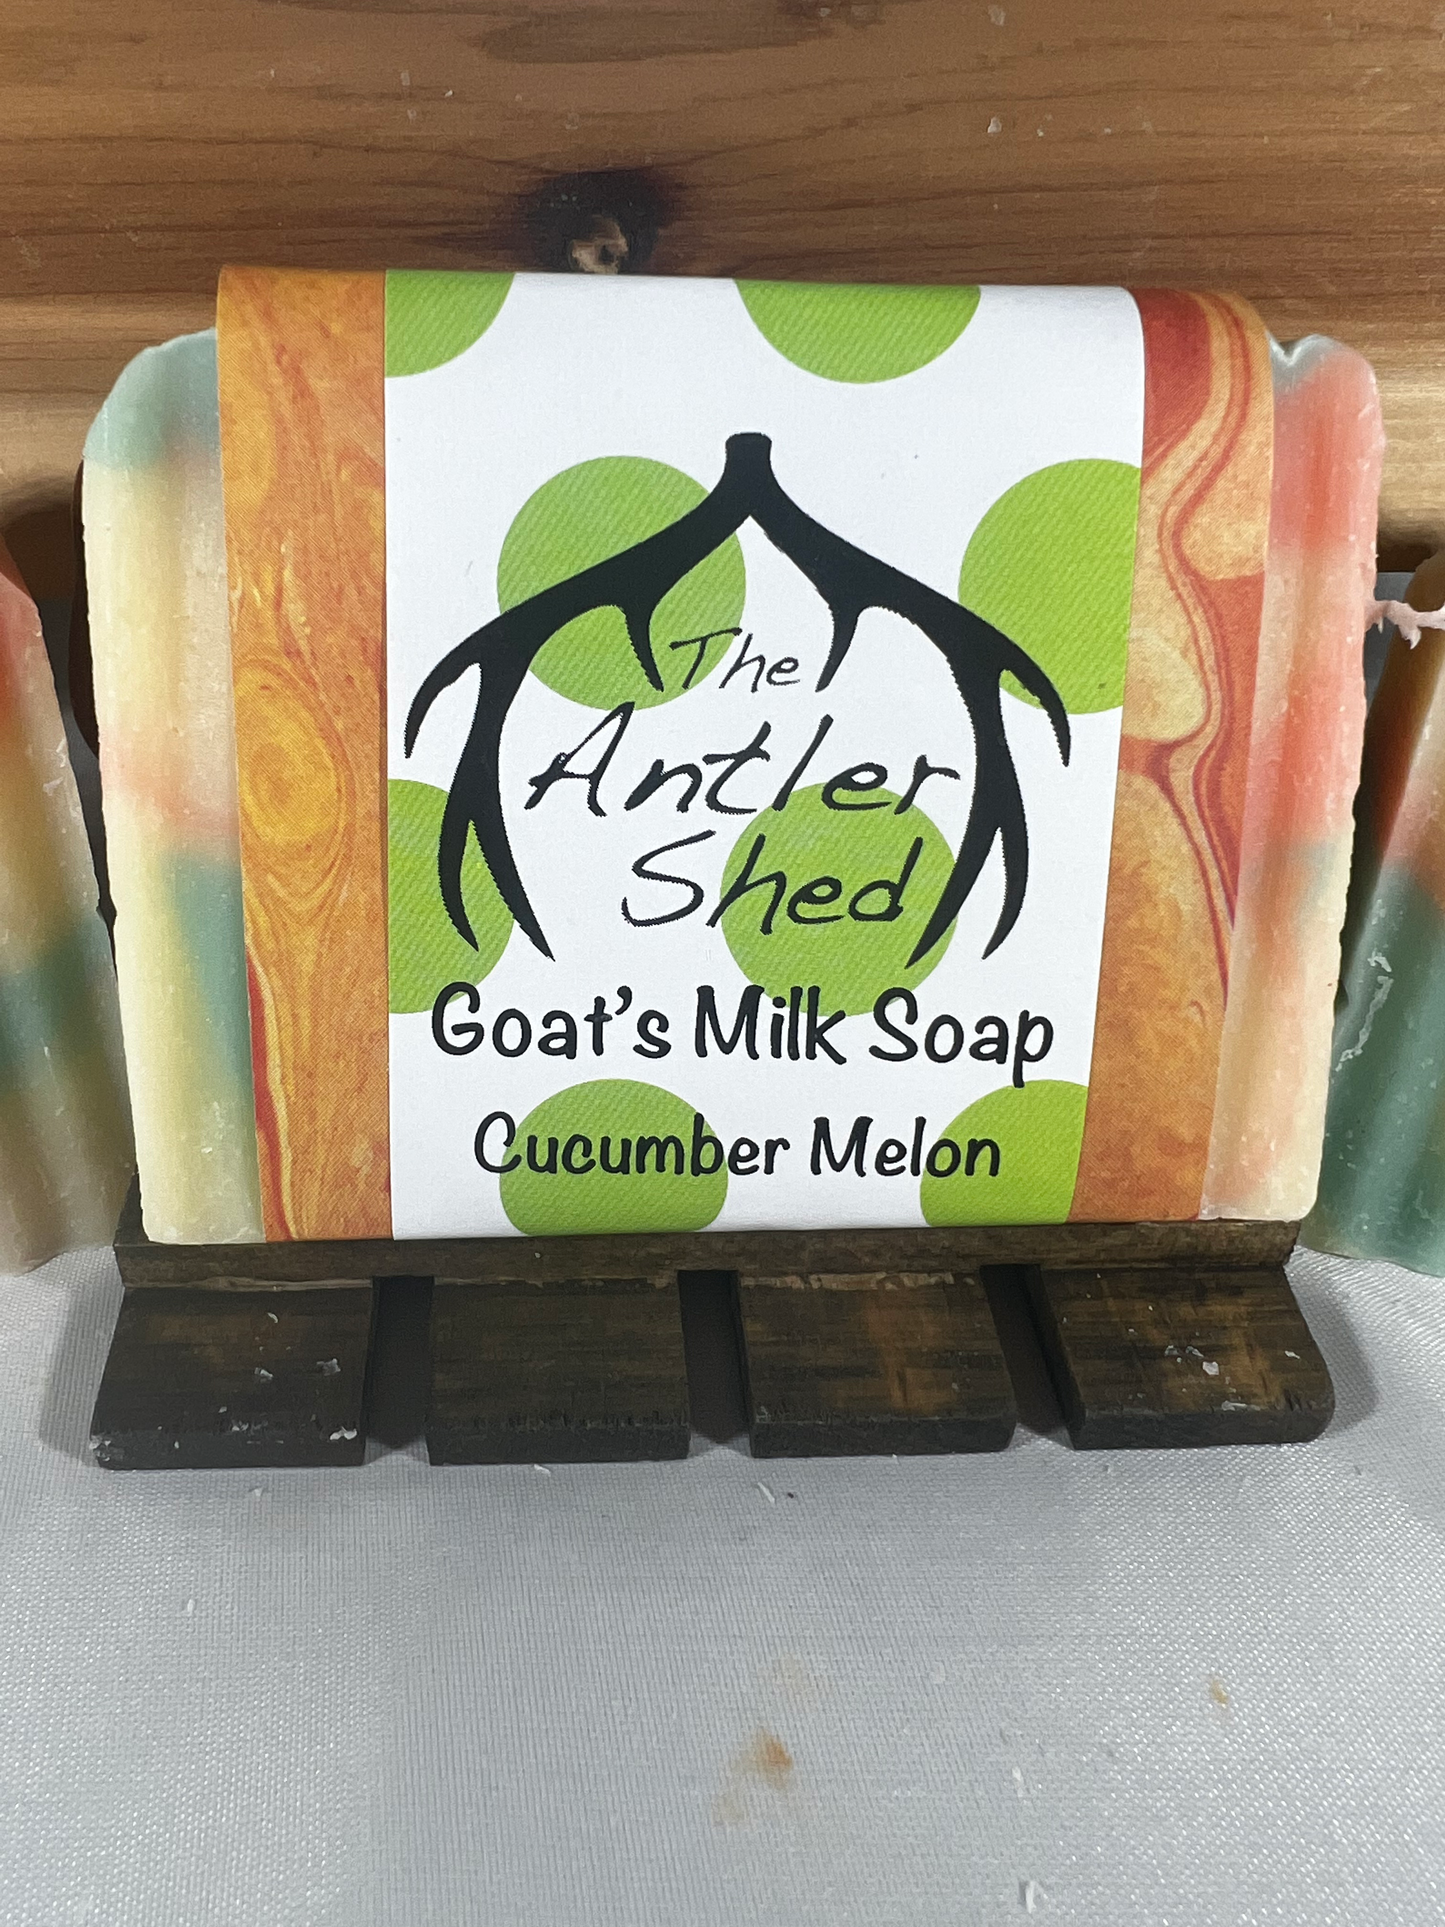 Cucumber Melon Goats Milk Soap